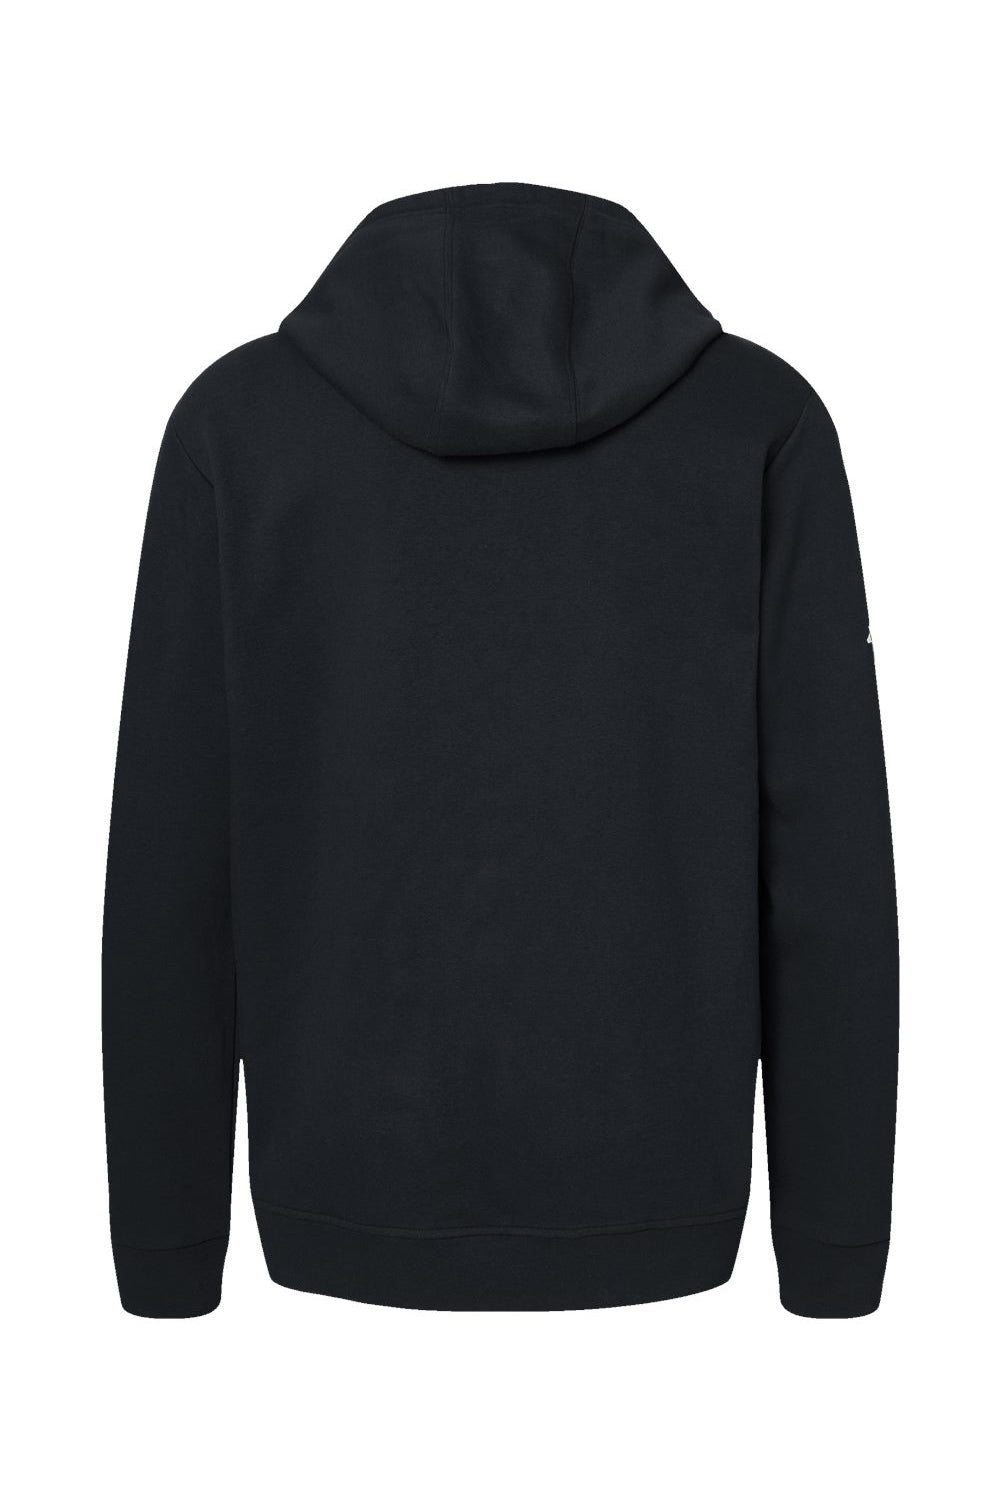 Adidas A432 Mens Fleece Hooded Sweatshirt Hoodie Black Flat Back